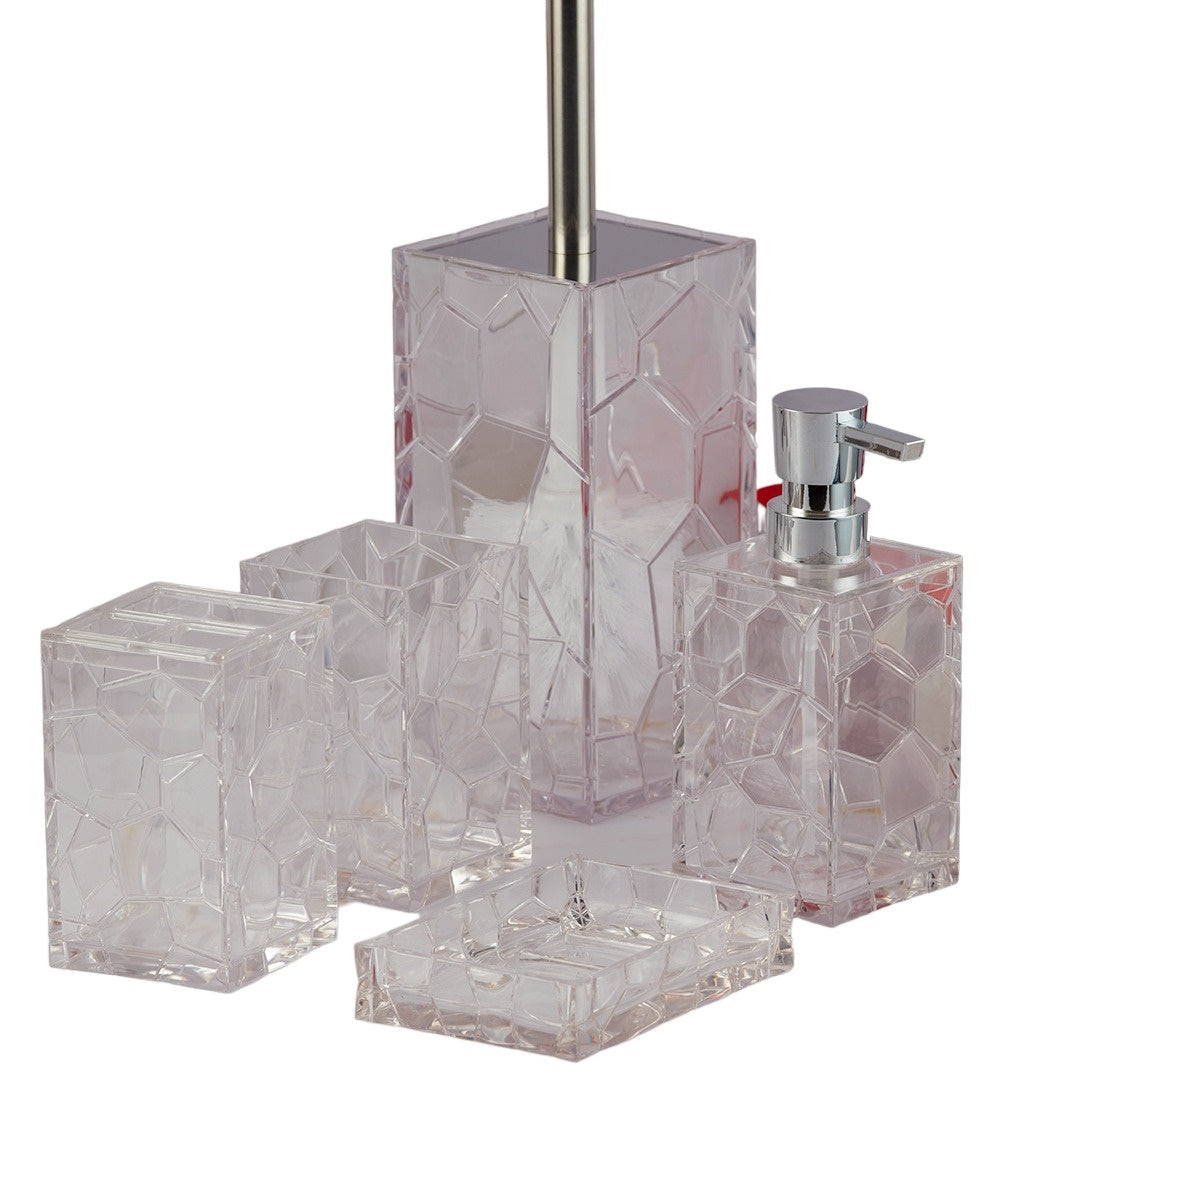 Acrylic Bathroom Accessories Set of 5 Bath Set with Soap Dispenser (10044)